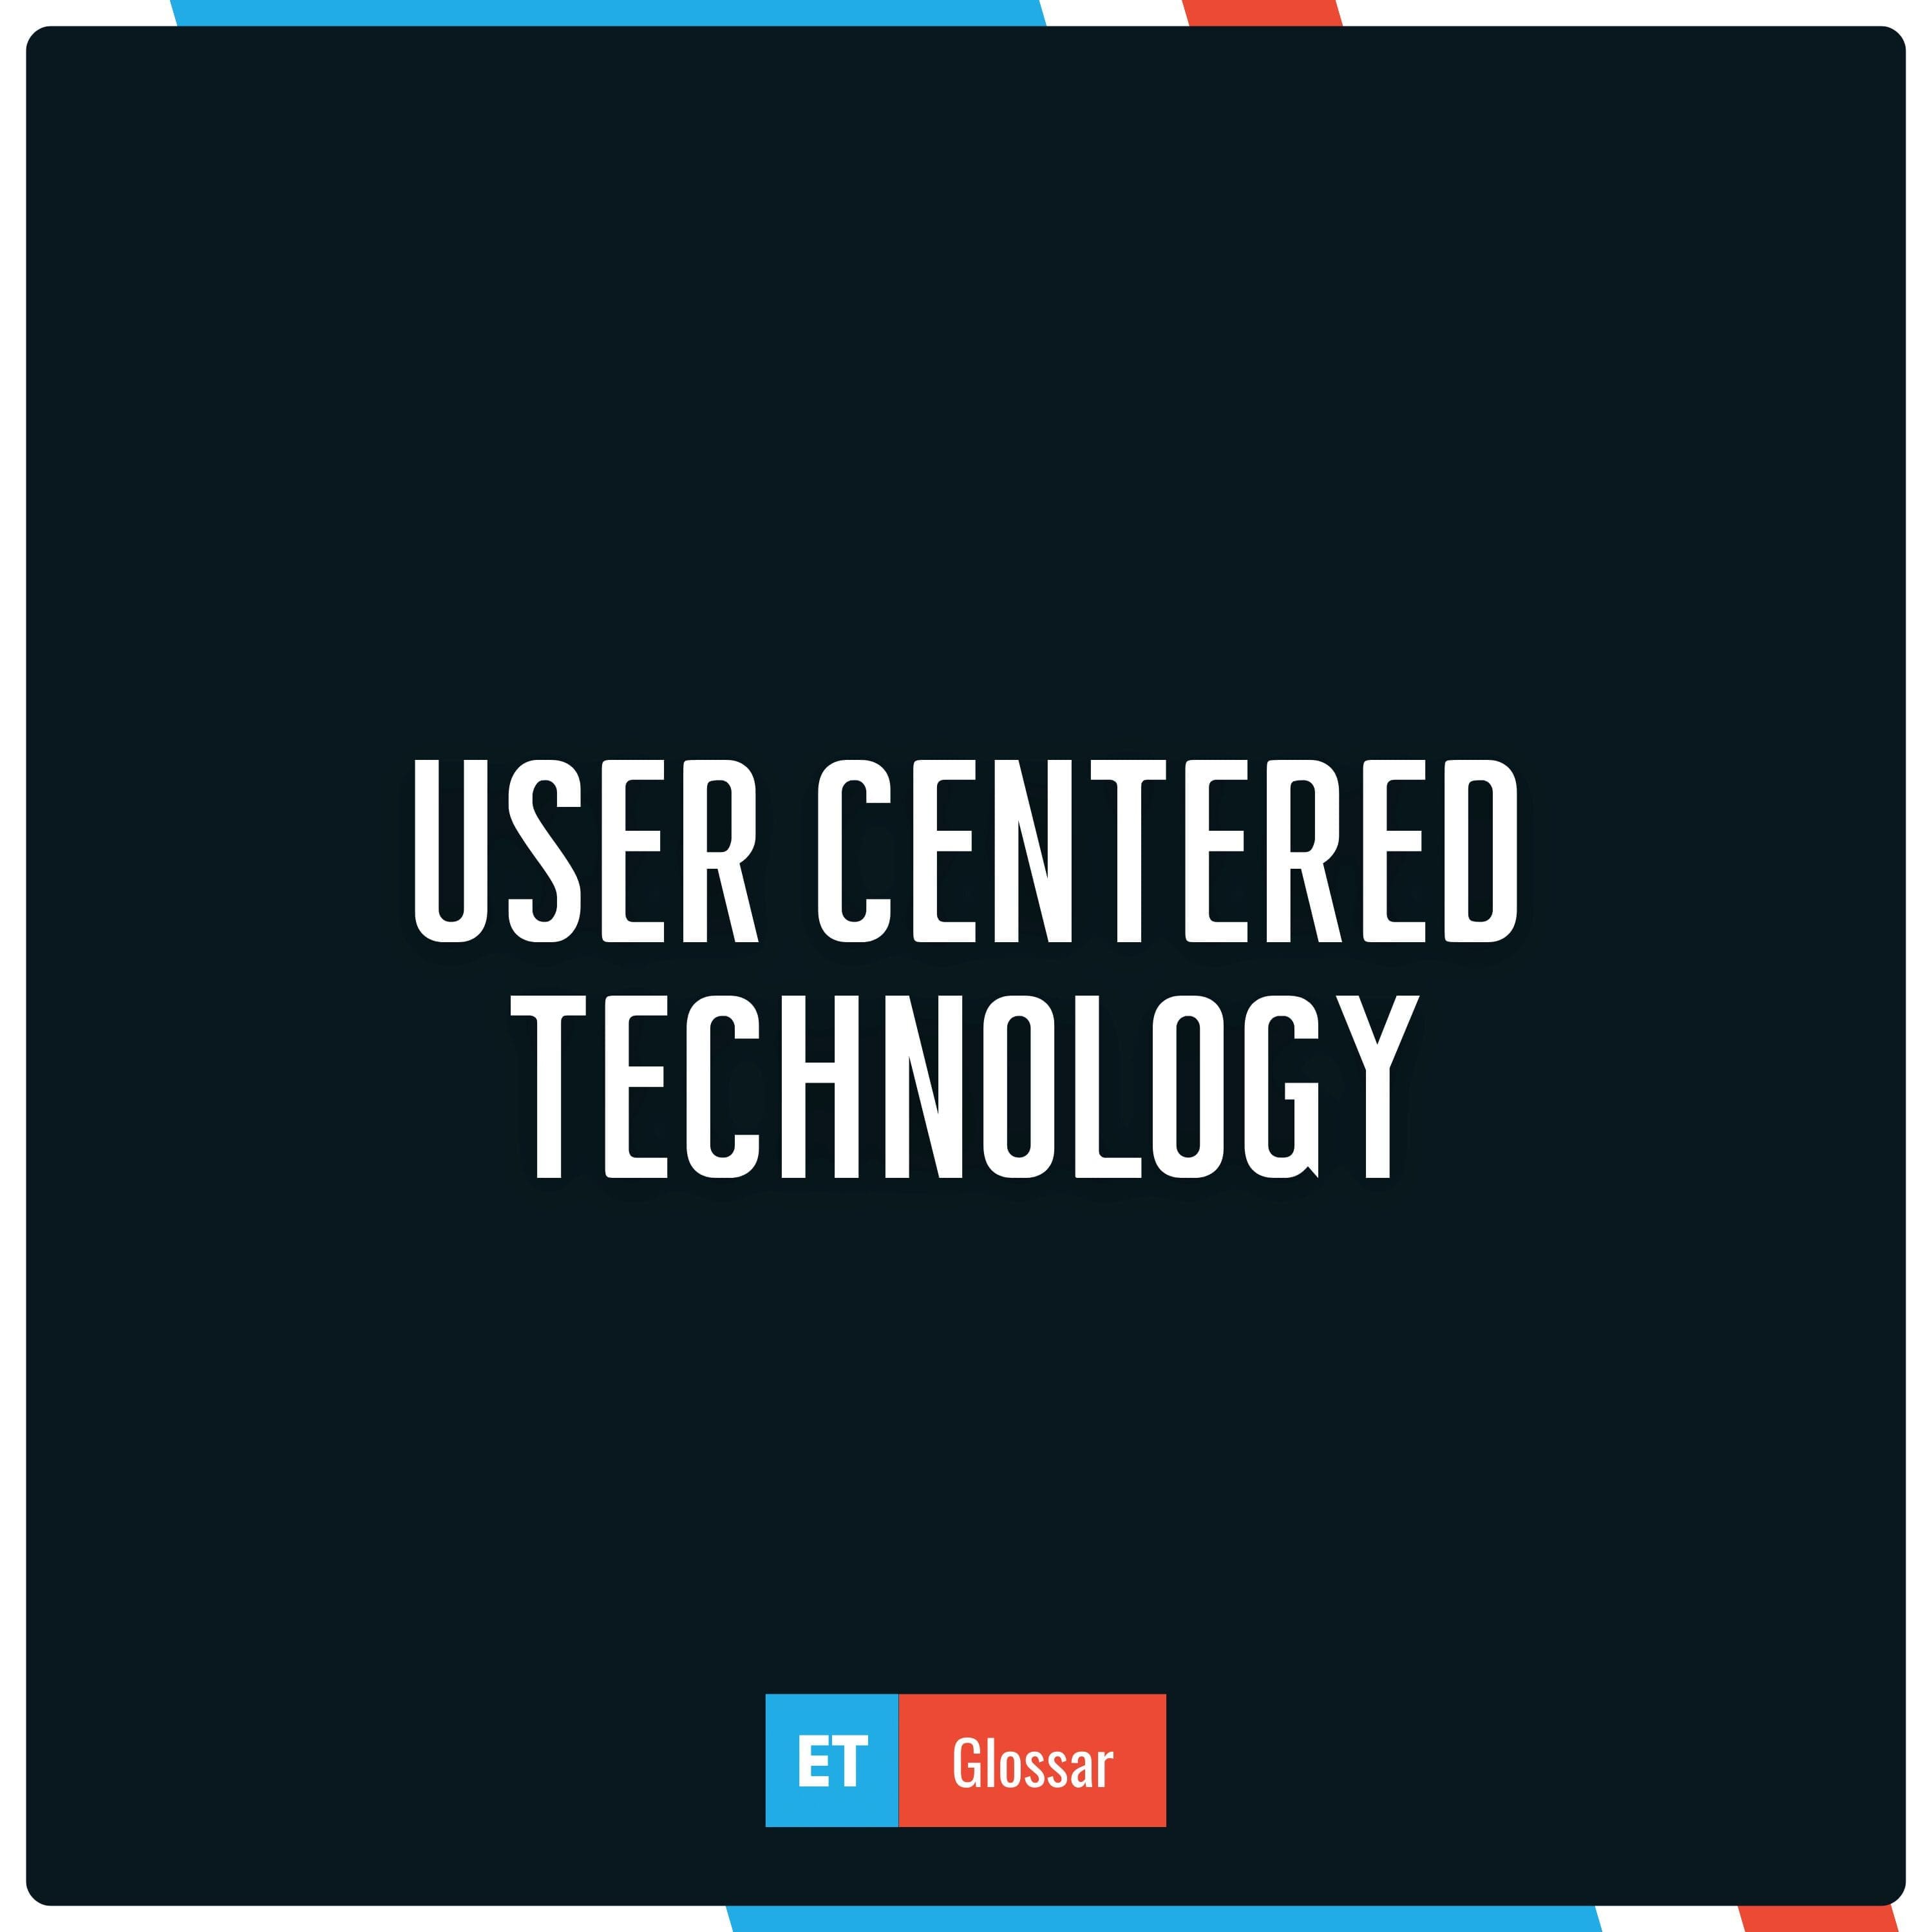 Der Begriff User Centered Technology im Exciting Tech Glossar erklärt